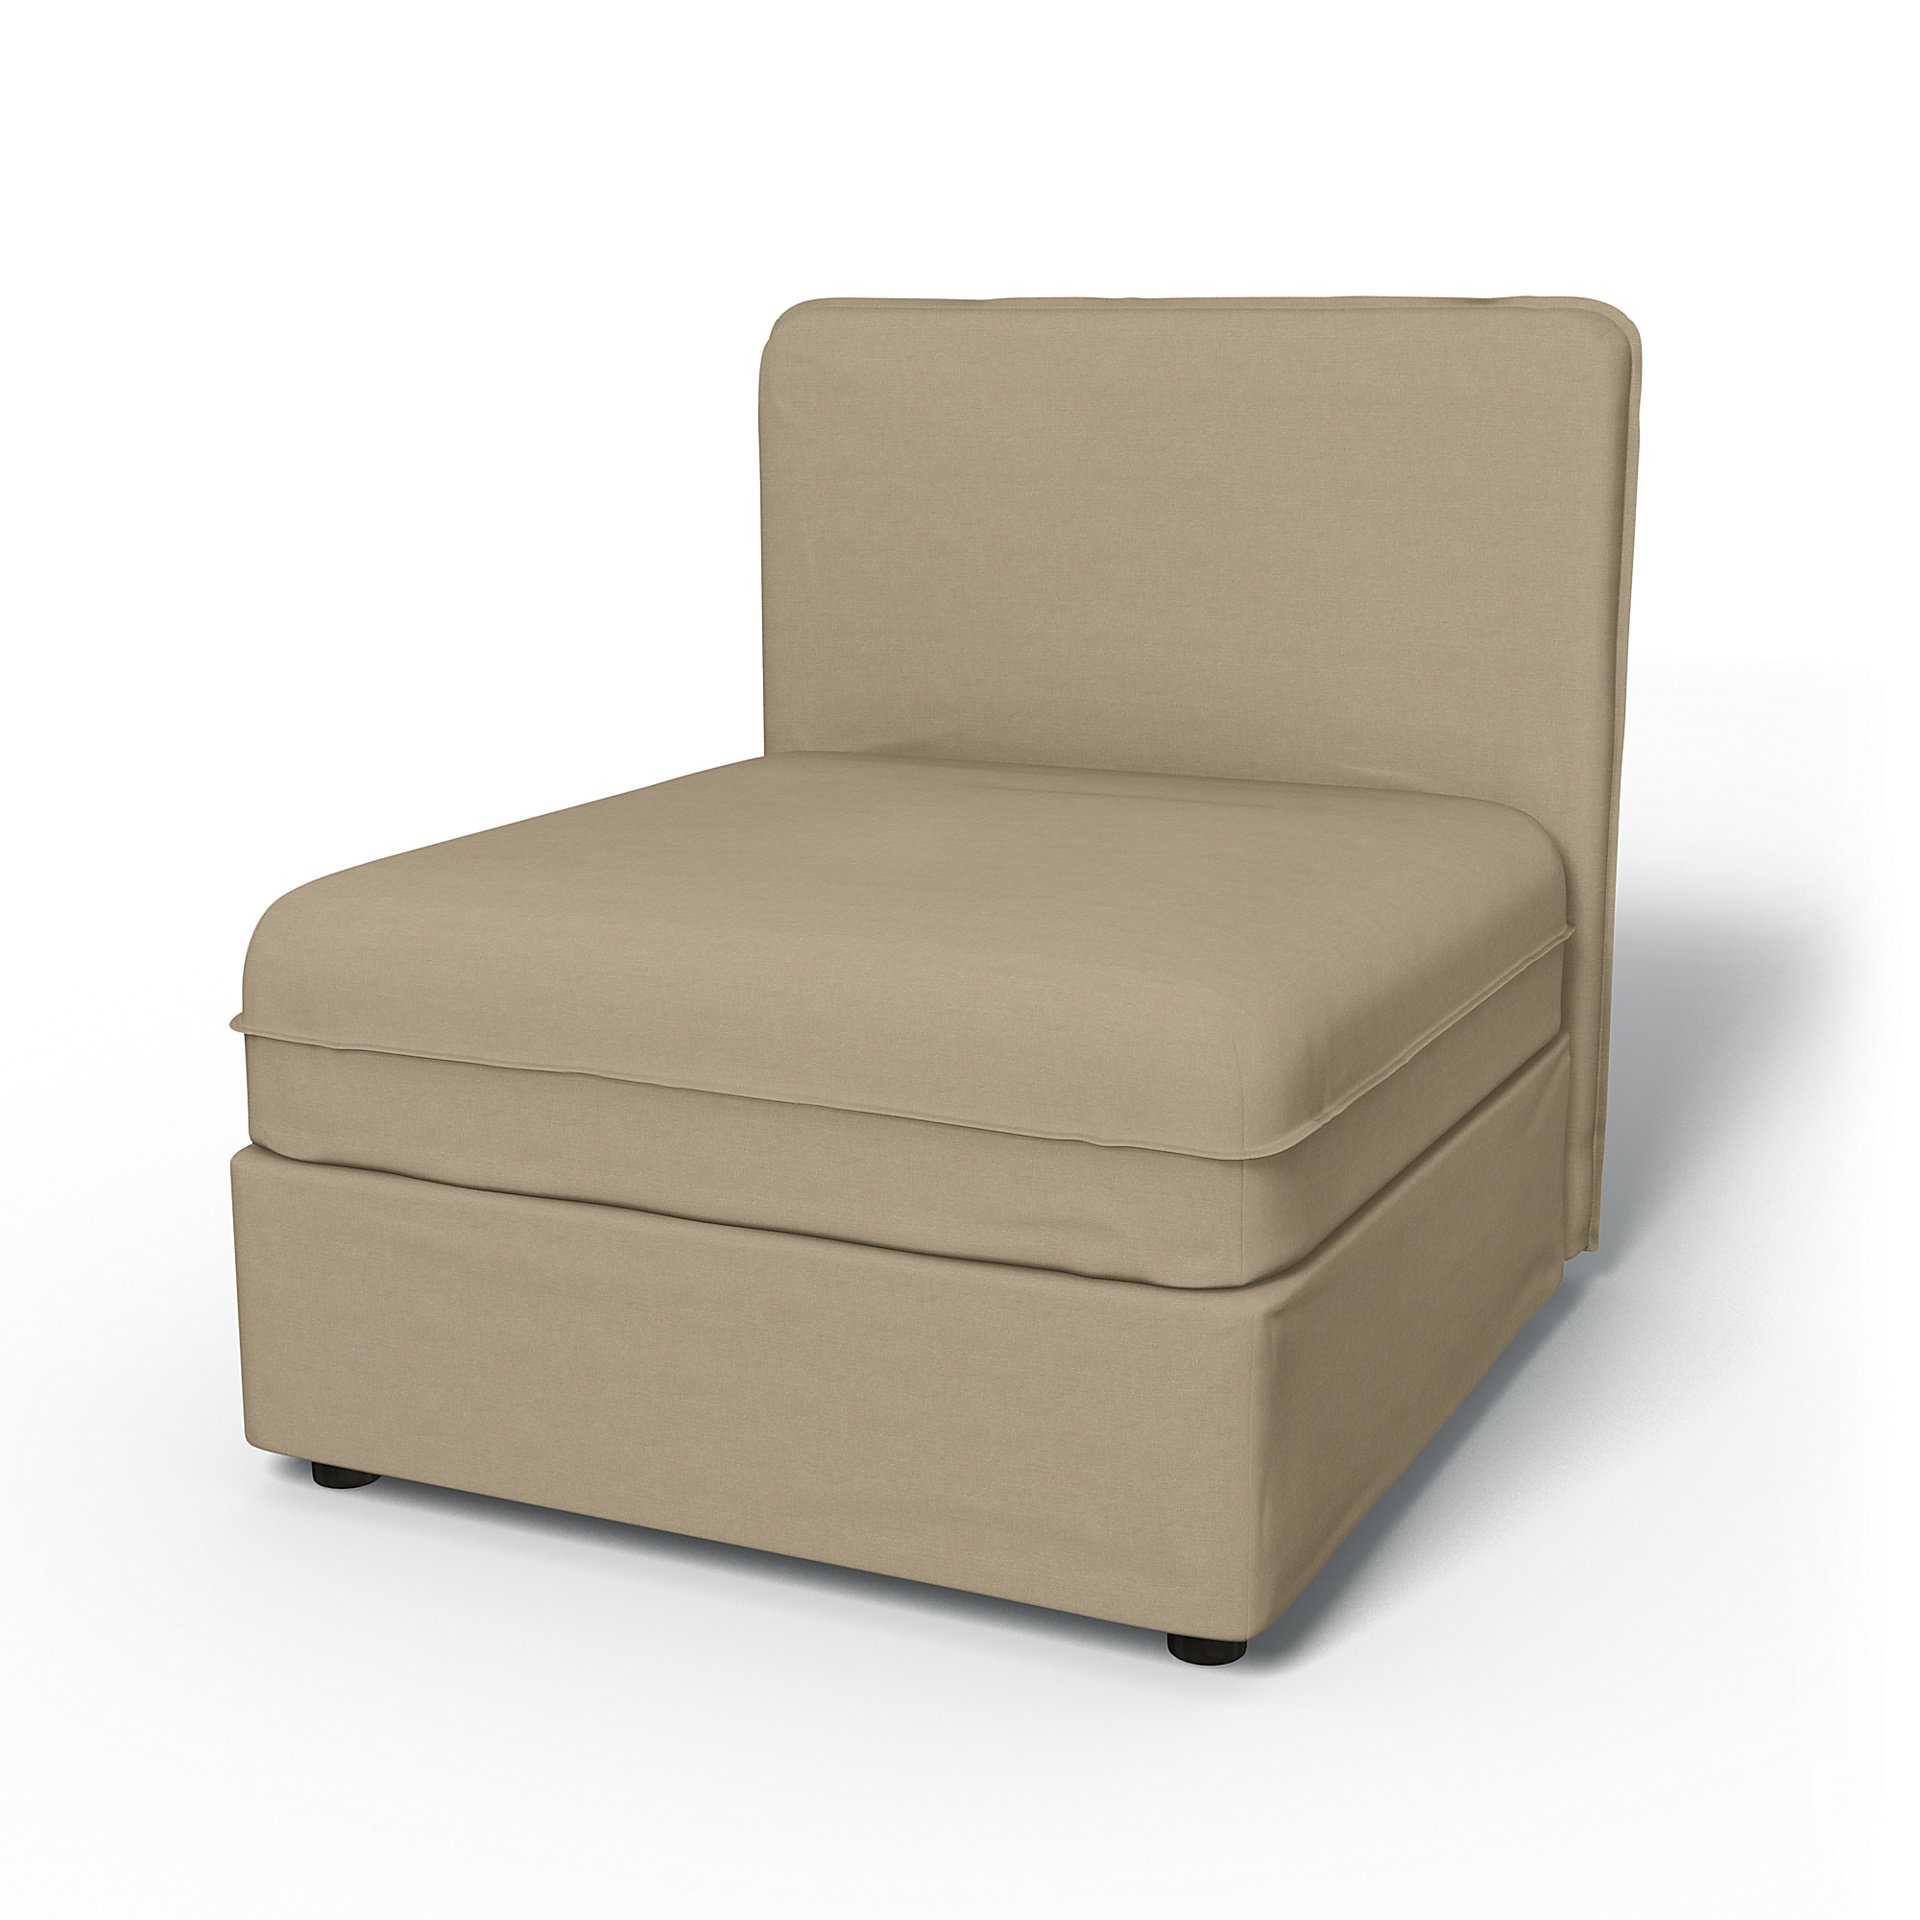 IKEA - Vallentuna Seat Module with Low Back Cover 80x80cm 32x32in, Tan, Linen - Bemz